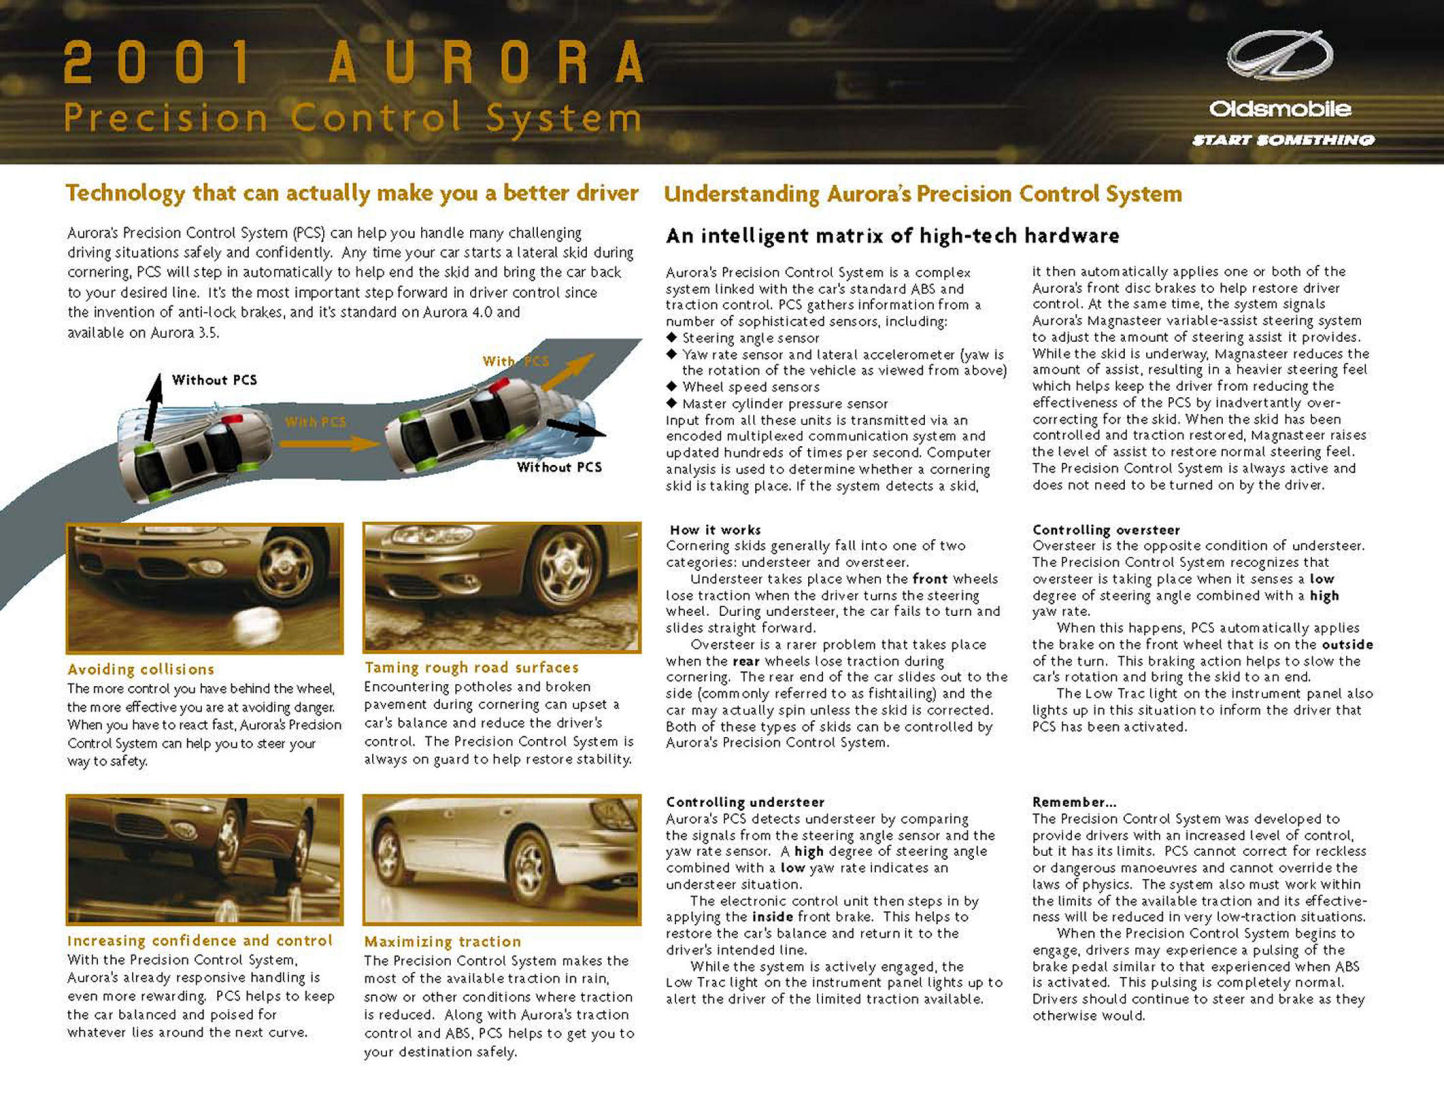 2001 Oldsmobile Aurora Data Sheet-02